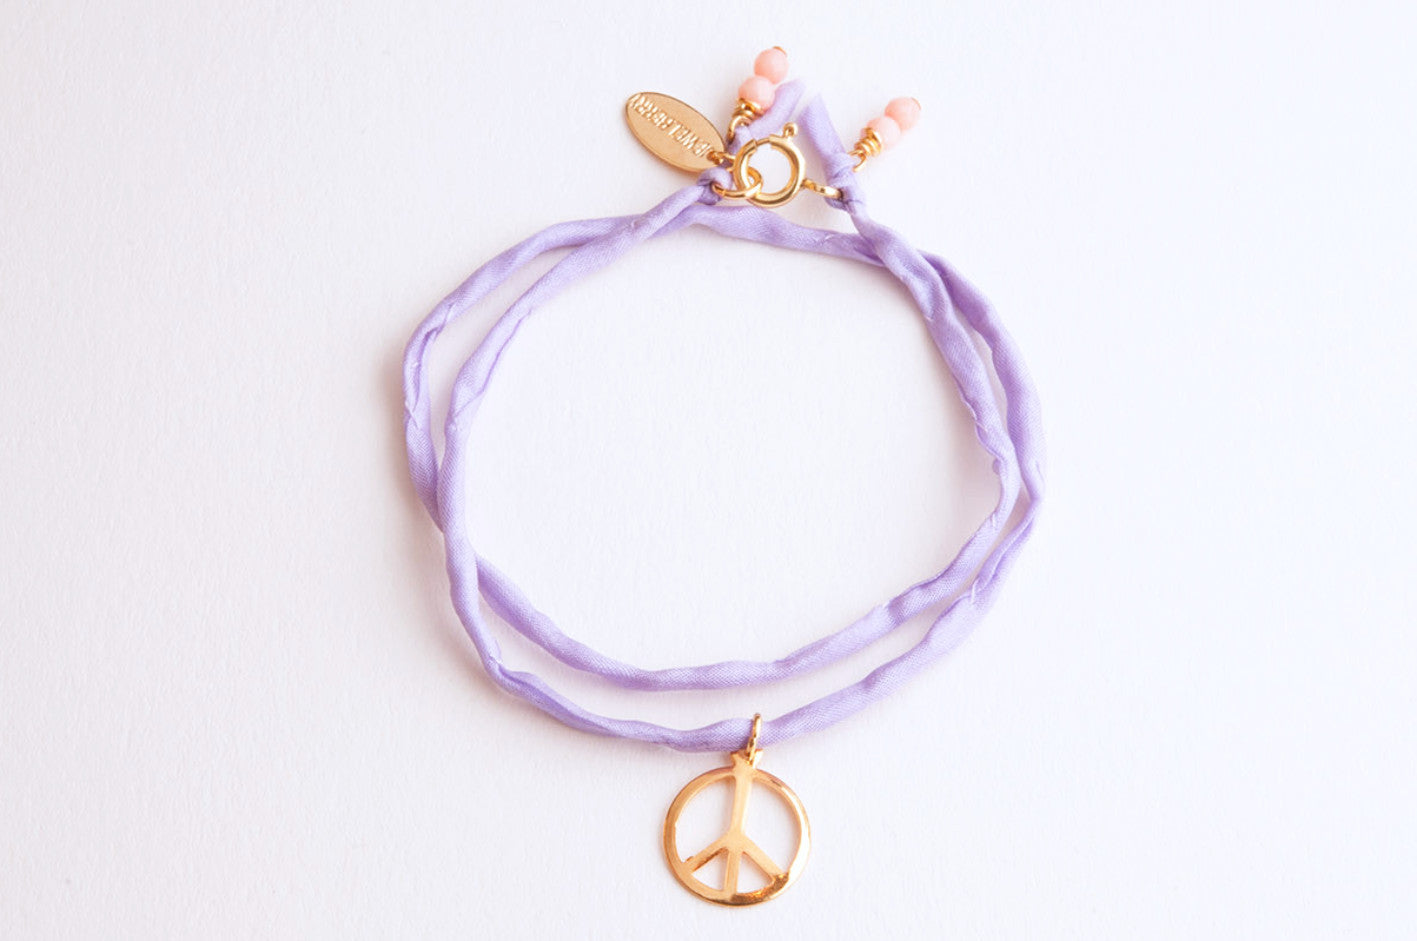 Charity Armband Jewelberry for Almaterra PEACE vergoldet